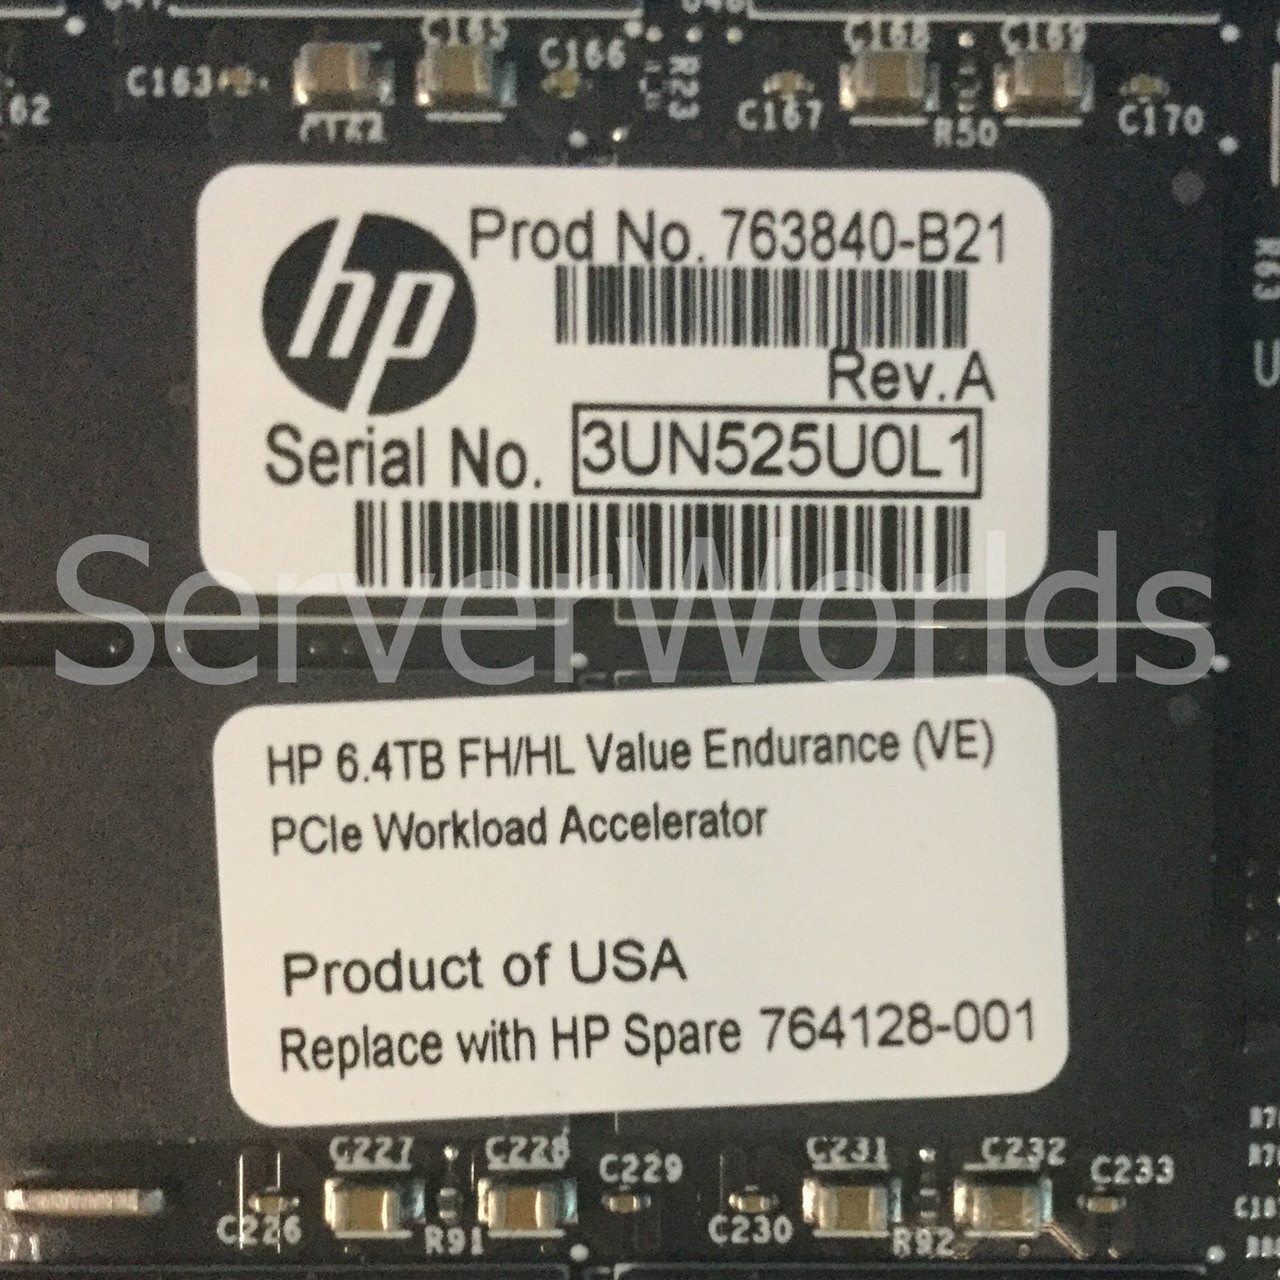 HP 763840-B21 6.4TB FH/HL VE PCIe Workload Accelerator 764128-001 